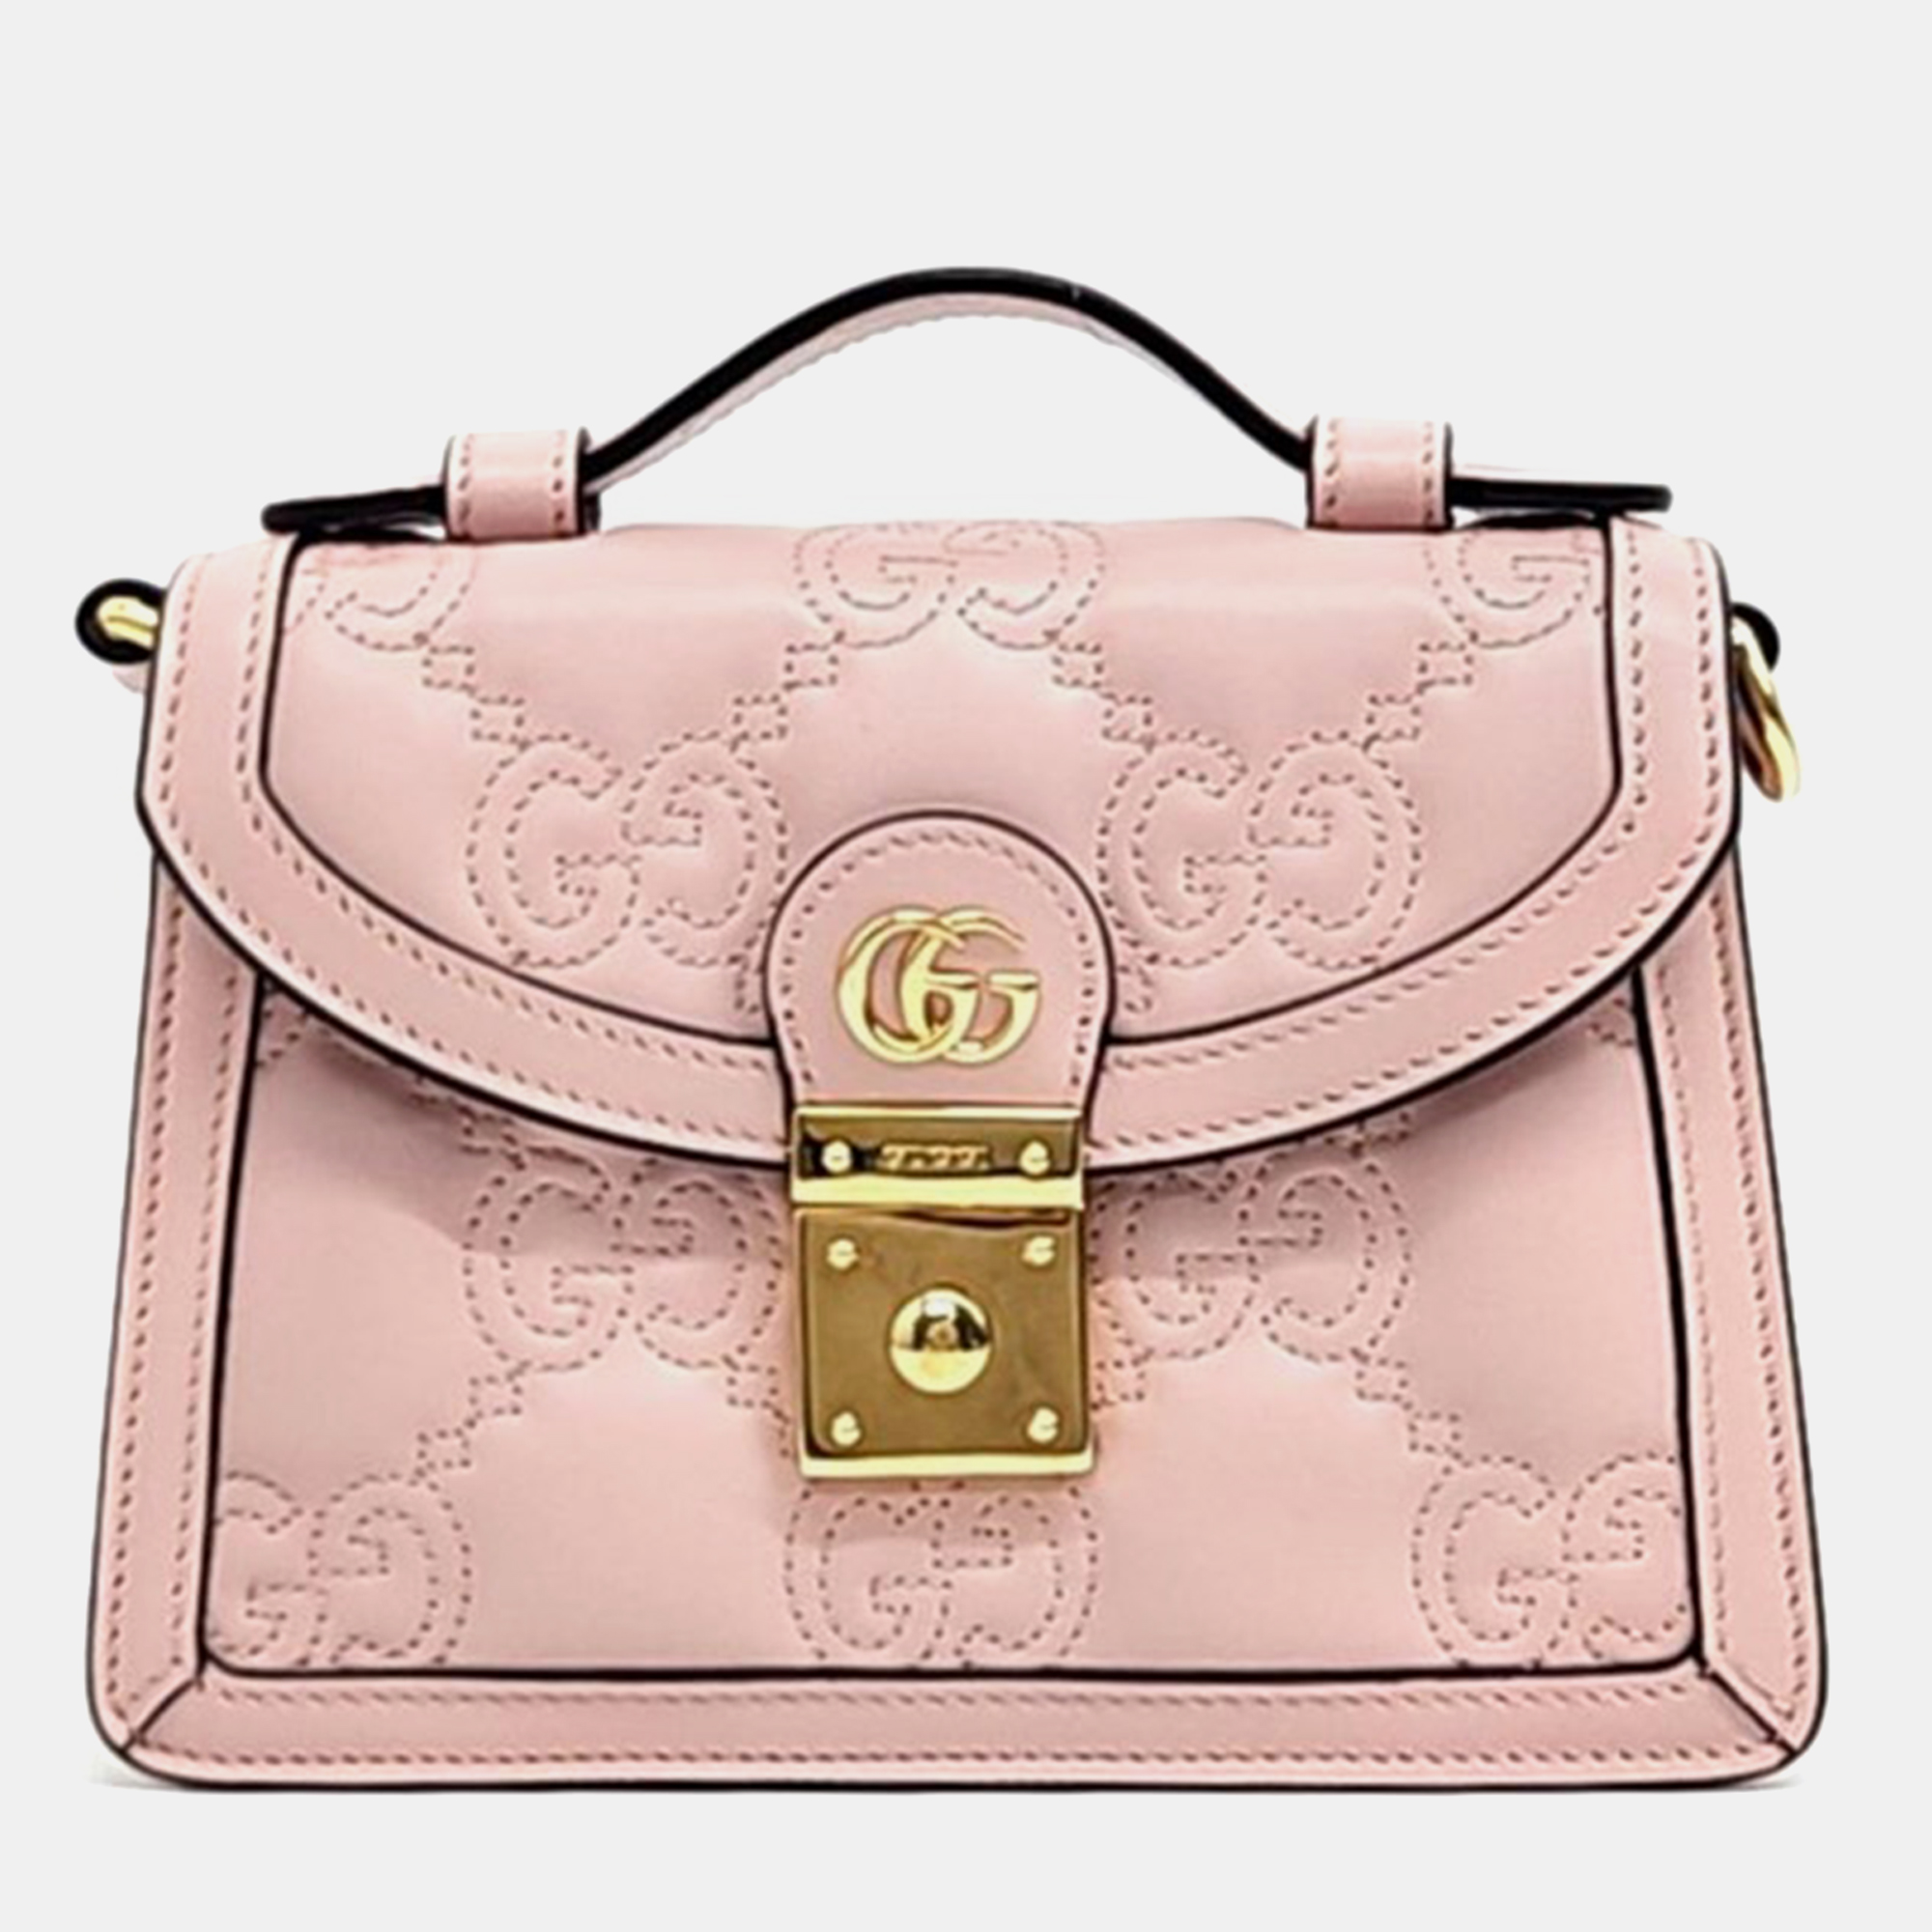 Gucci pink gg small top handle bag